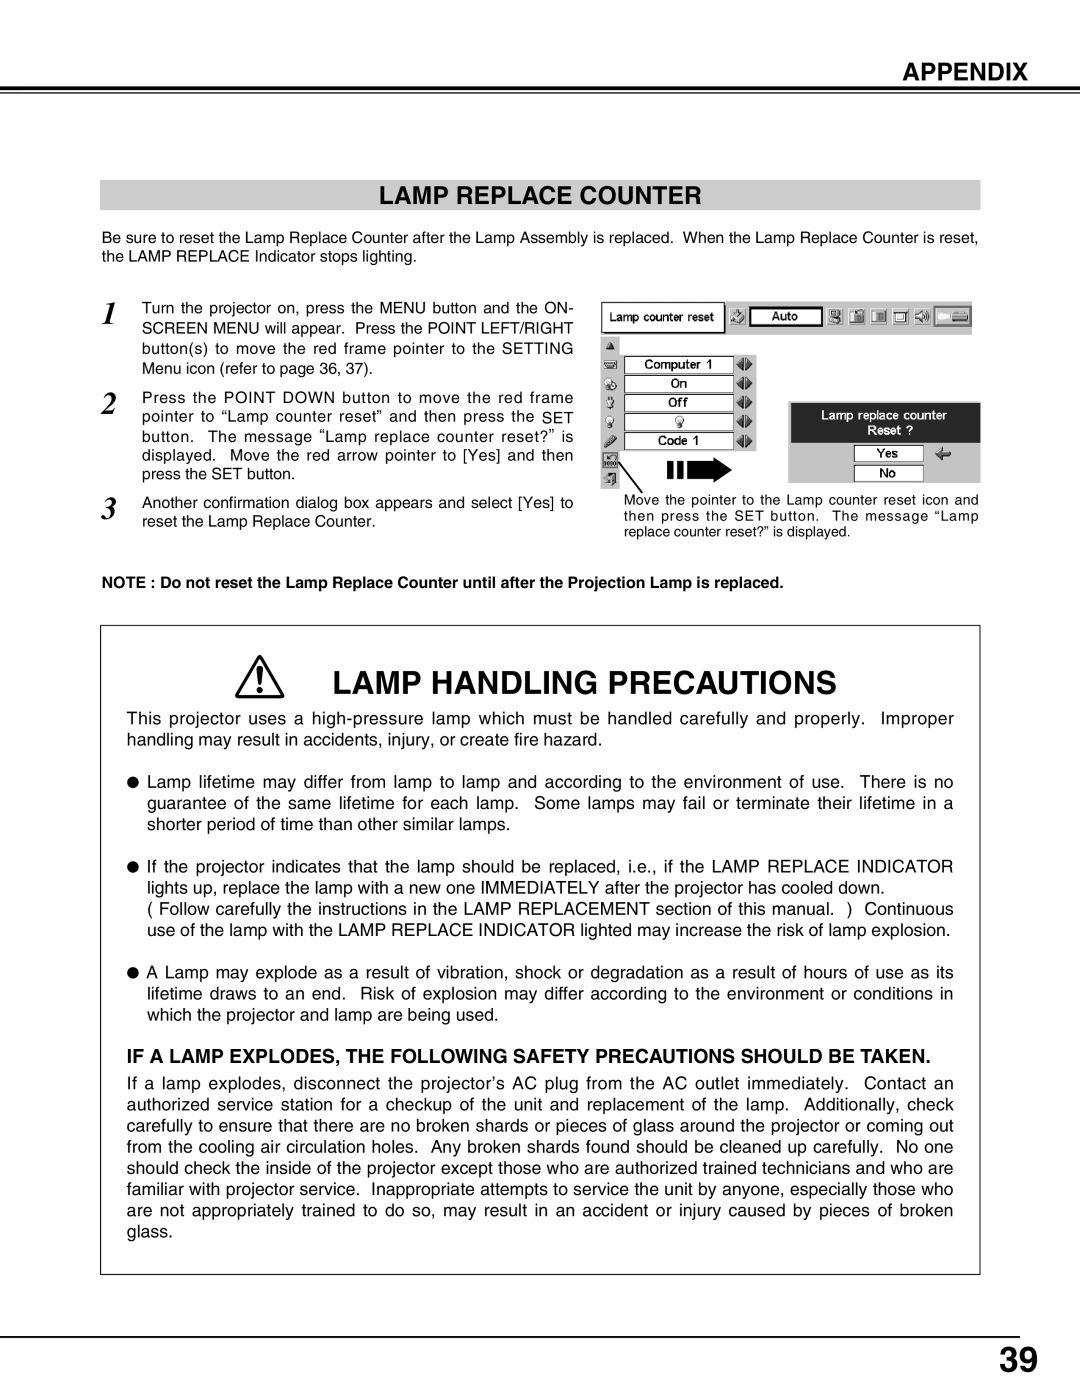 Canon LV-5200 owner manual Appendix Lamp Replace Counter, Lamp Handling Precautions 